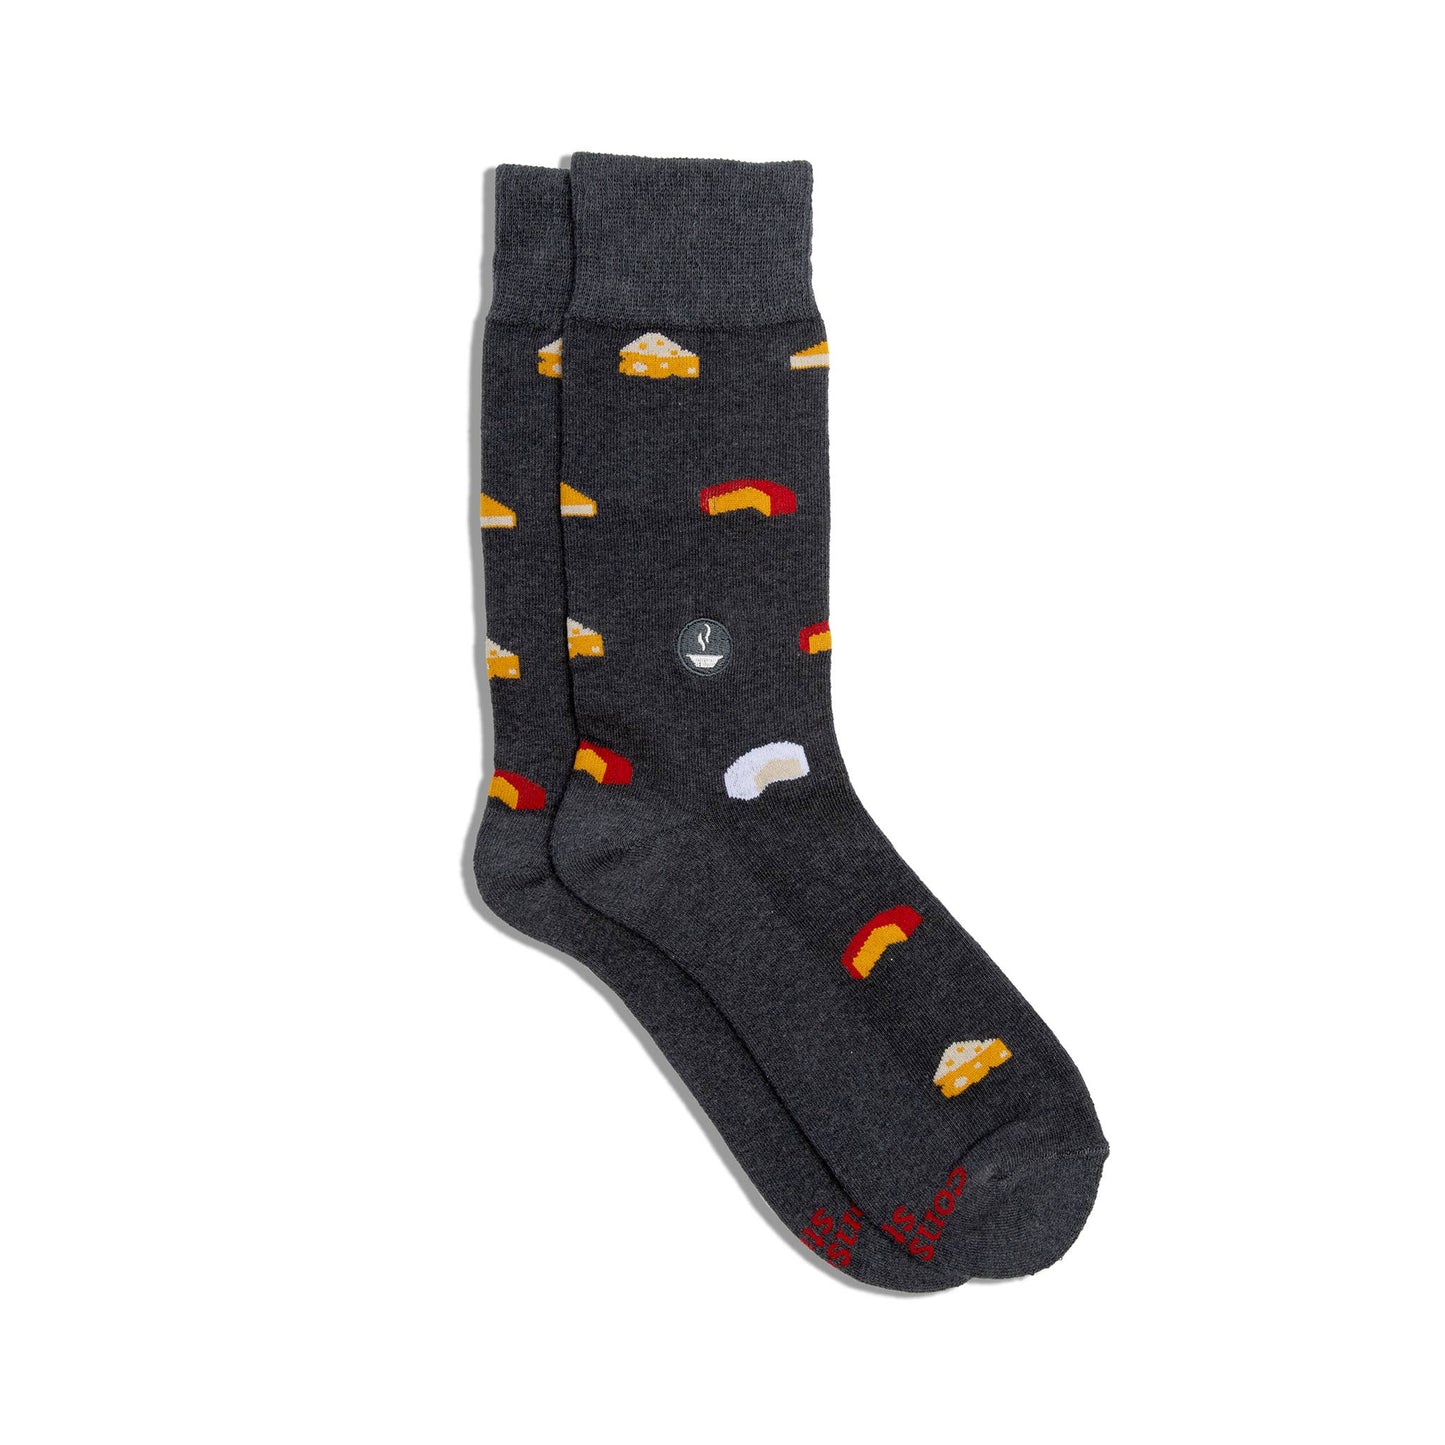 Men's Socks that Provide Meals in Gray | Fair Trade | Fits Men's Sizes 8.5-13